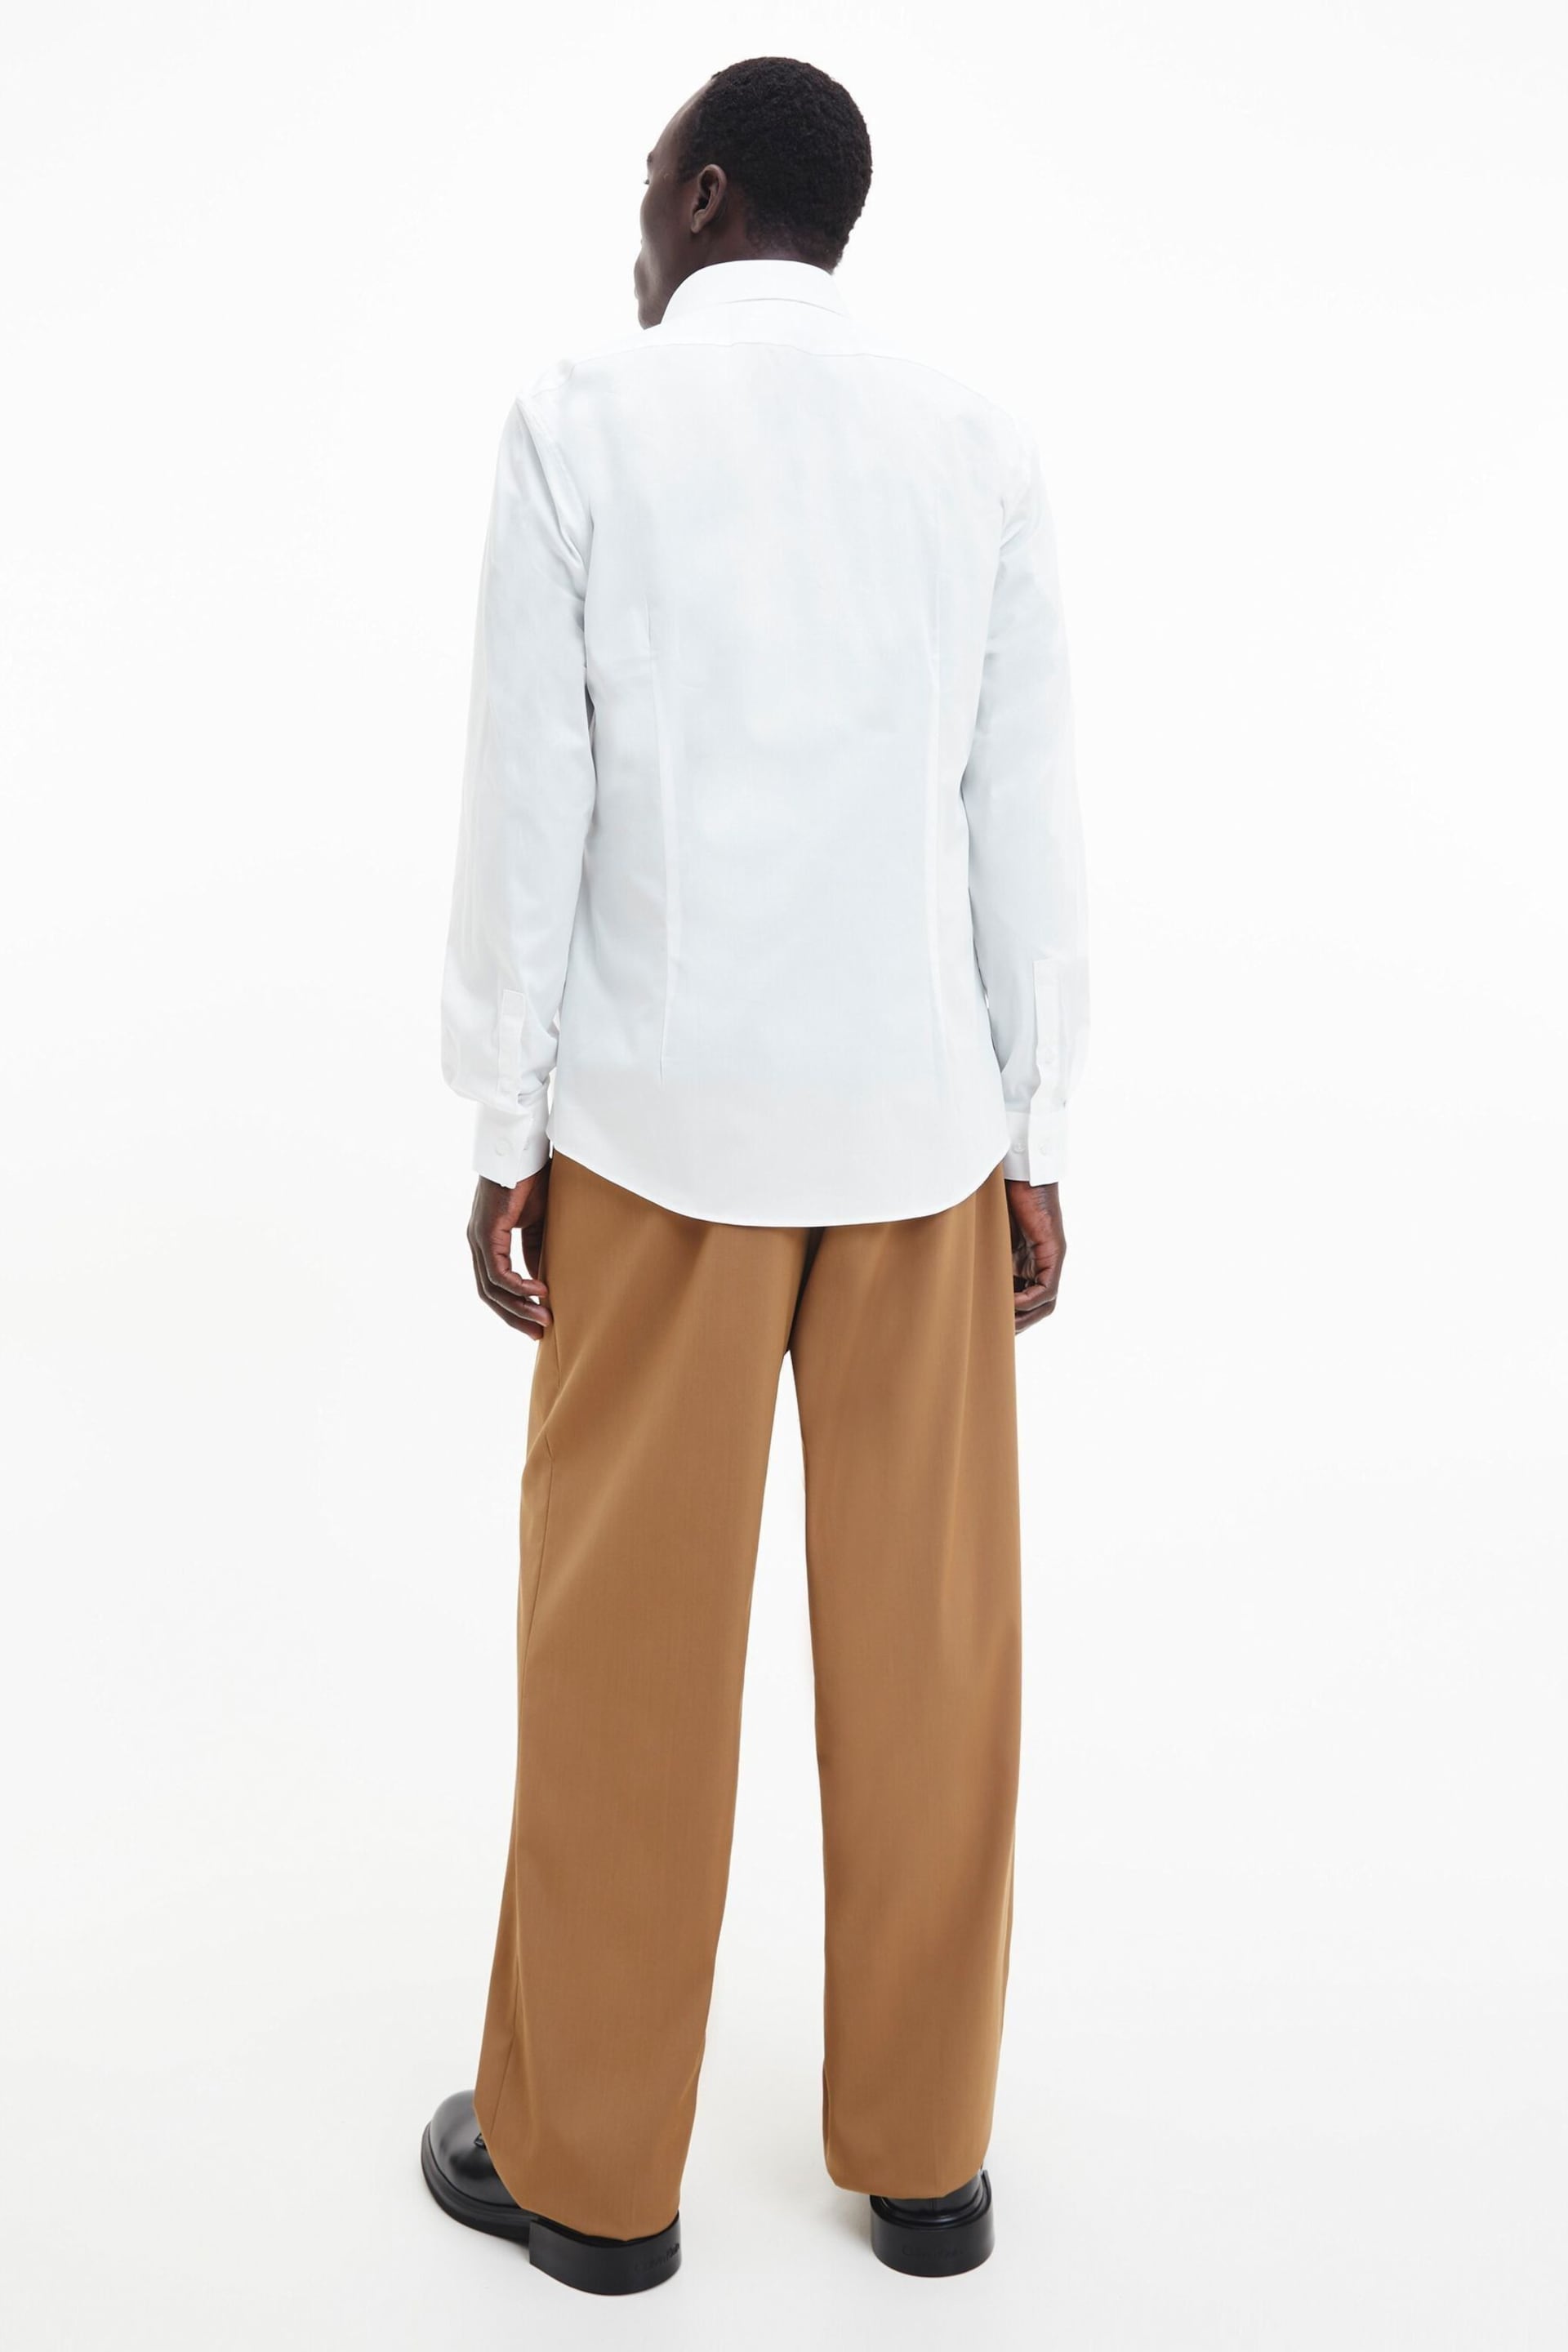 Calvin Klein White Slim Fit Poplin Stretch Shirt - Image 2 of 5